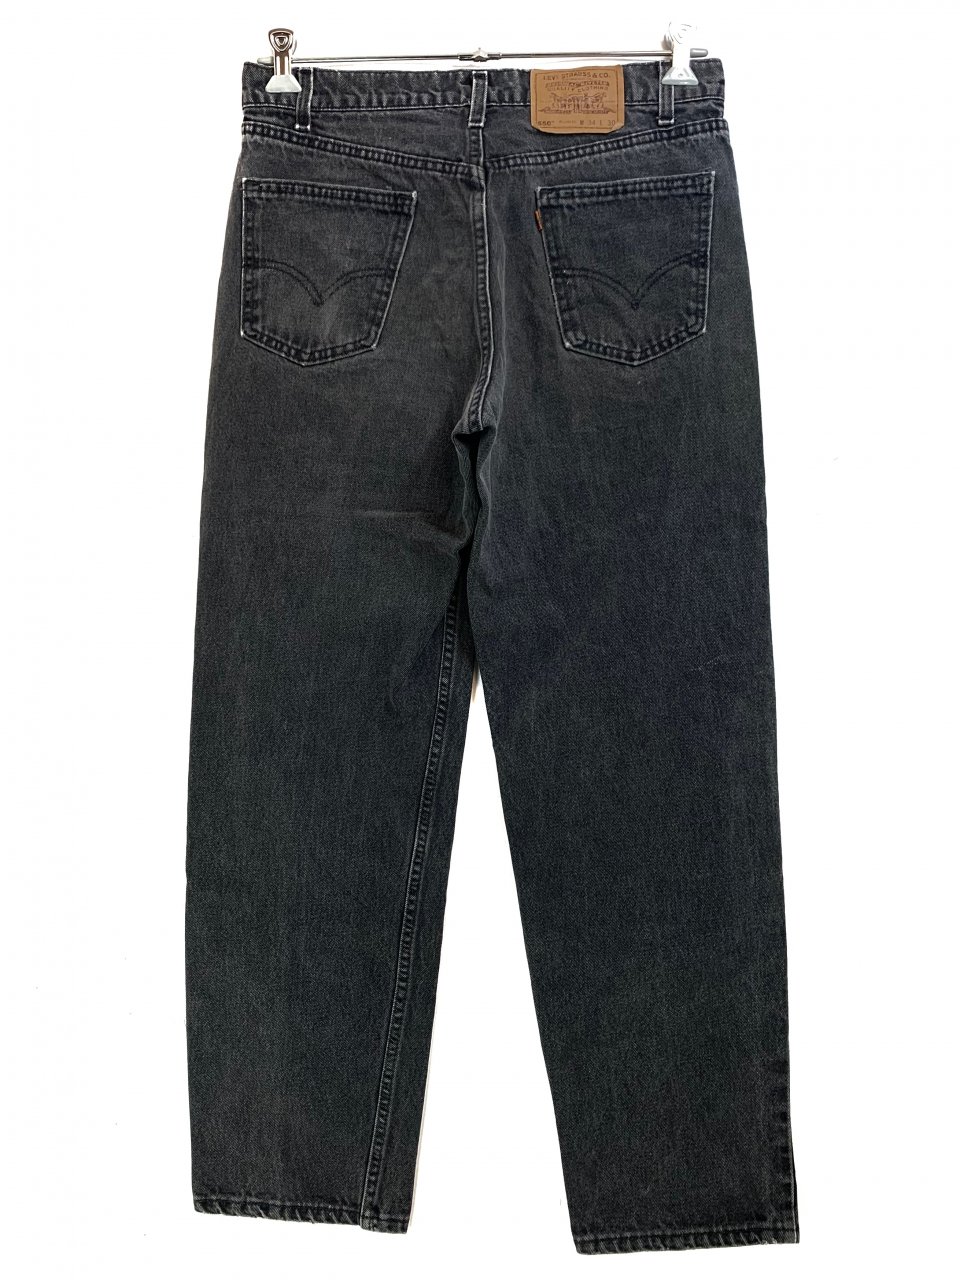 USA製 90s Levi's 550 Black Denim Pants 黒 34×30 リーバイス Levis 